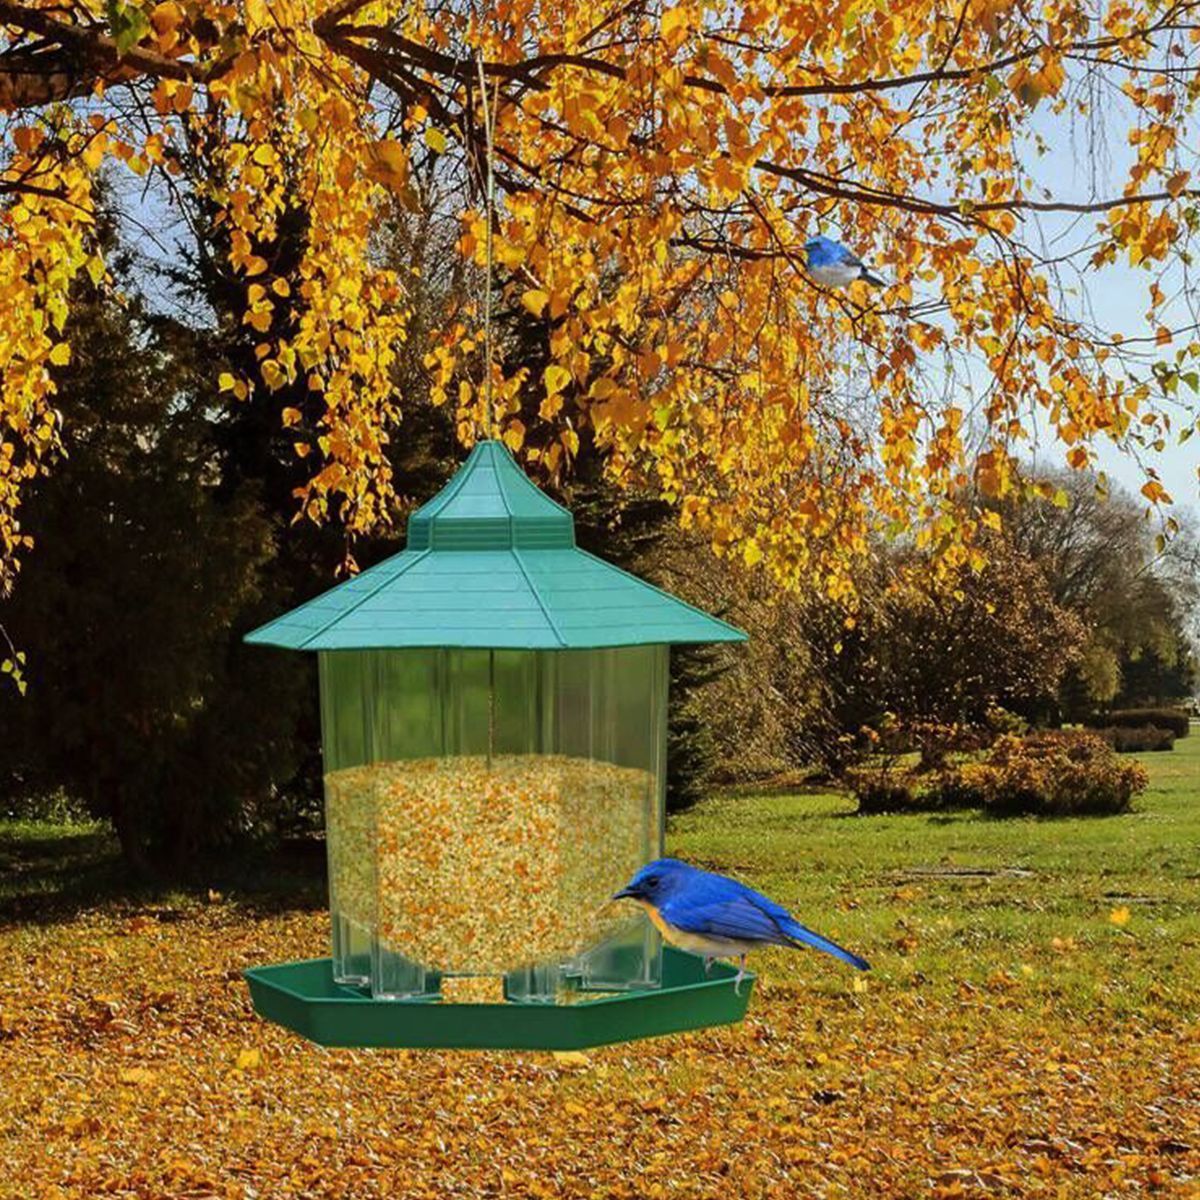 Waterproof-Gazebo-Hanging-Wild-Bird-Feeder-Outdoor-Feeding-For-Garden-Decorations-1695119